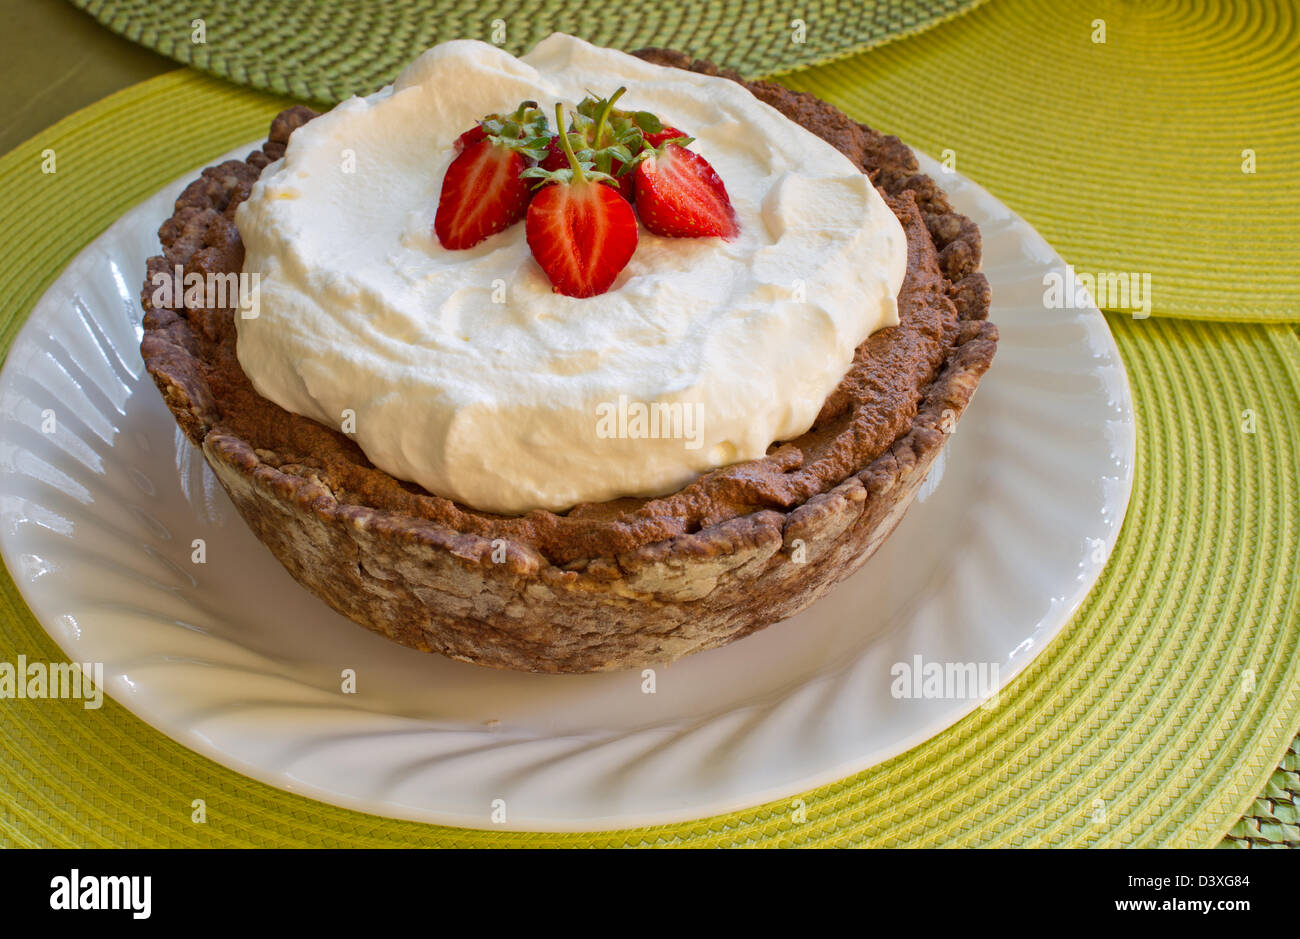 Delicious homemade chocolate strawberries tart Stock Photo